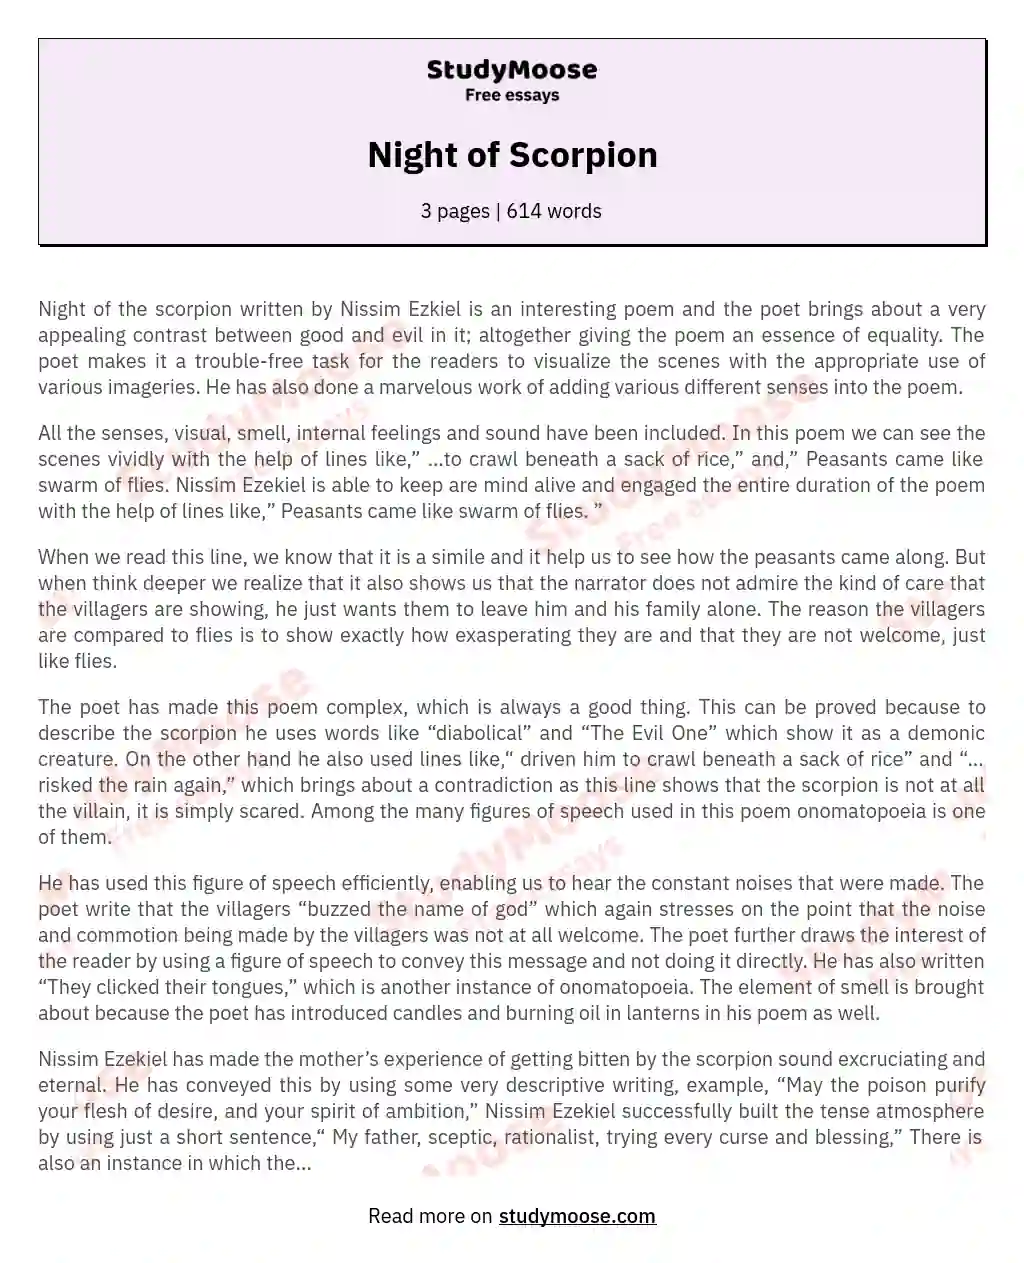 Night of Scorpion essay